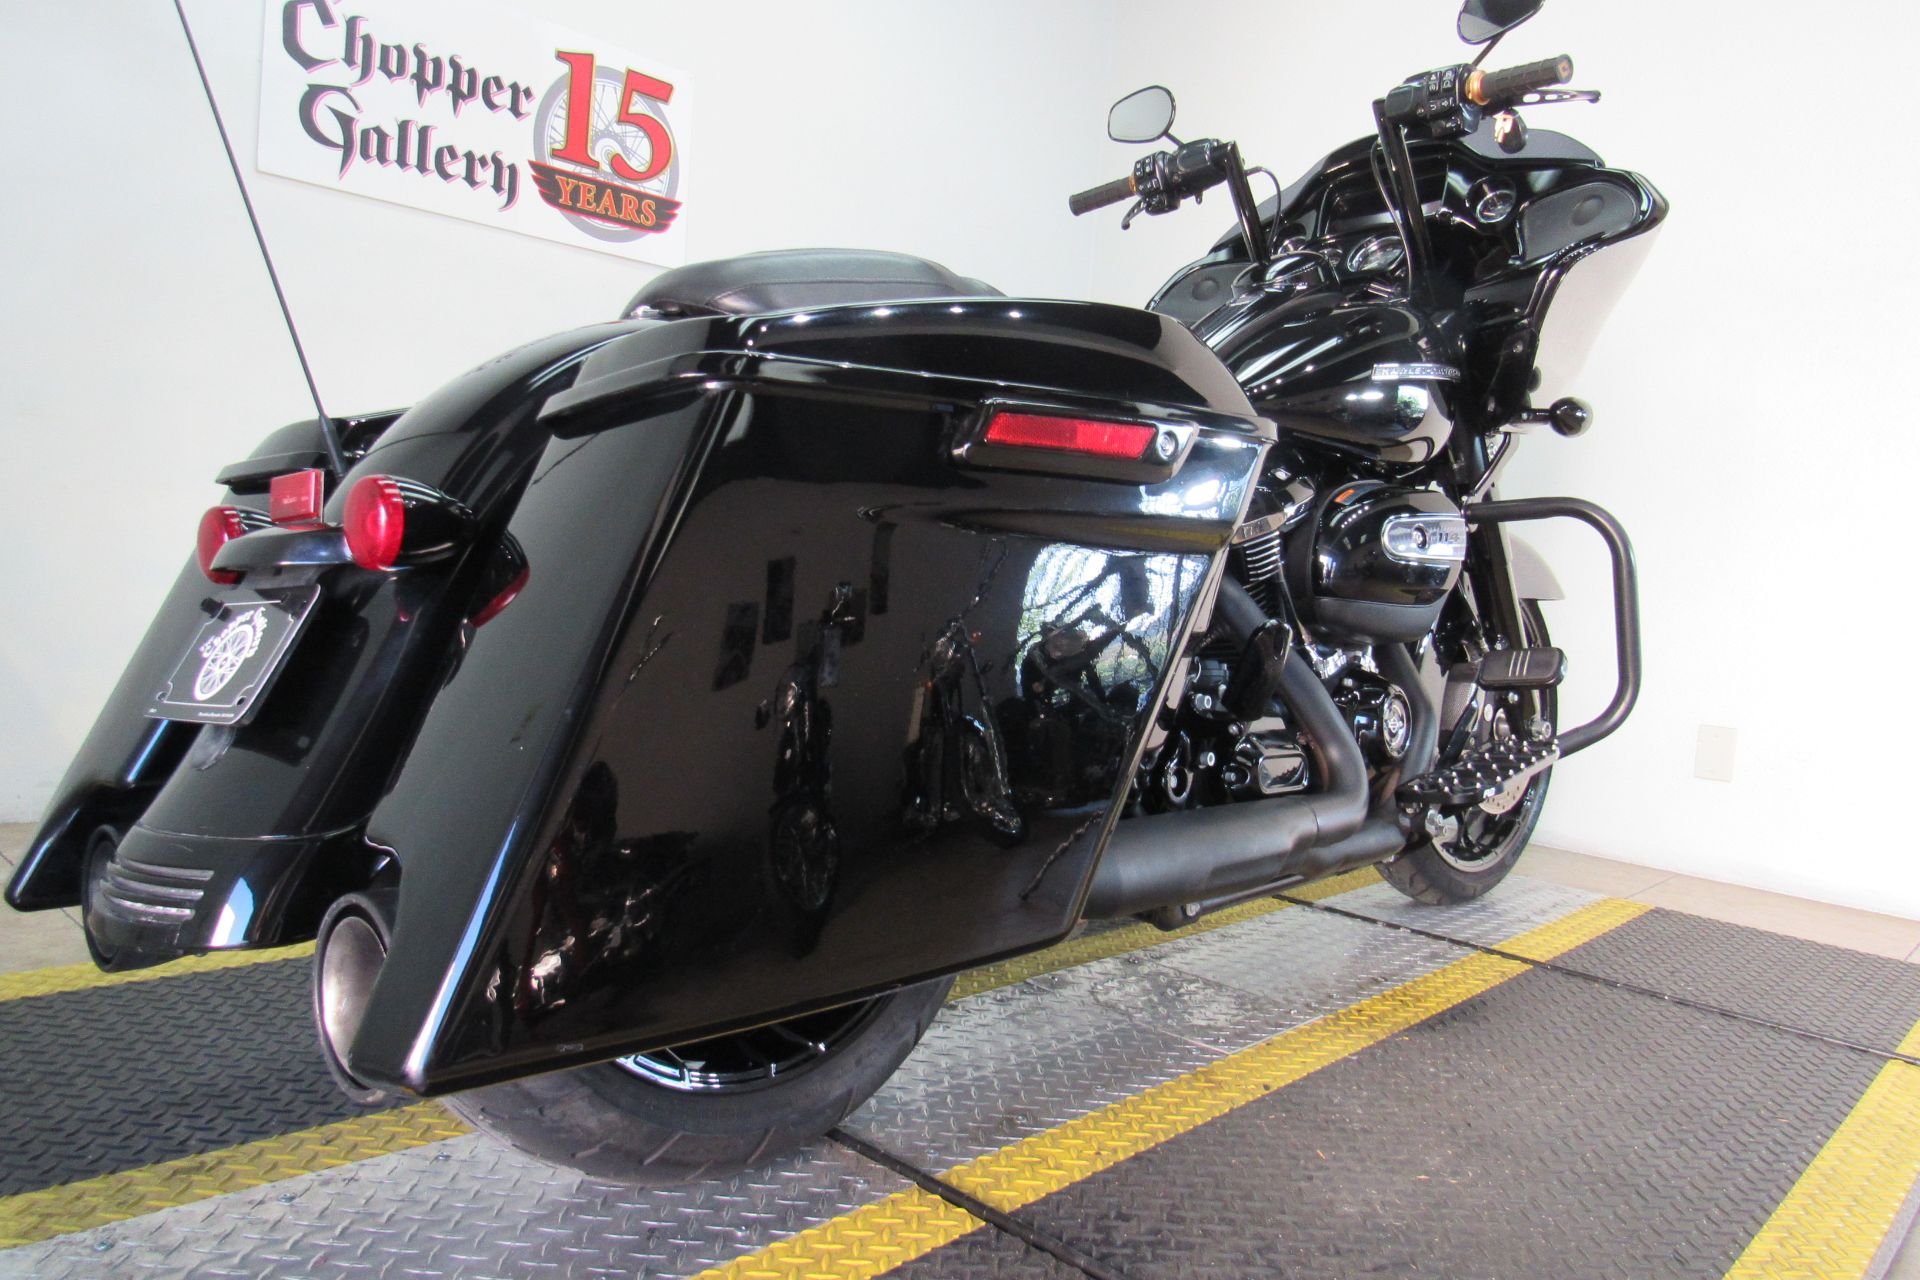 2020 Harley-Davidson Road Glide® Special in Temecula, California - Photo 37